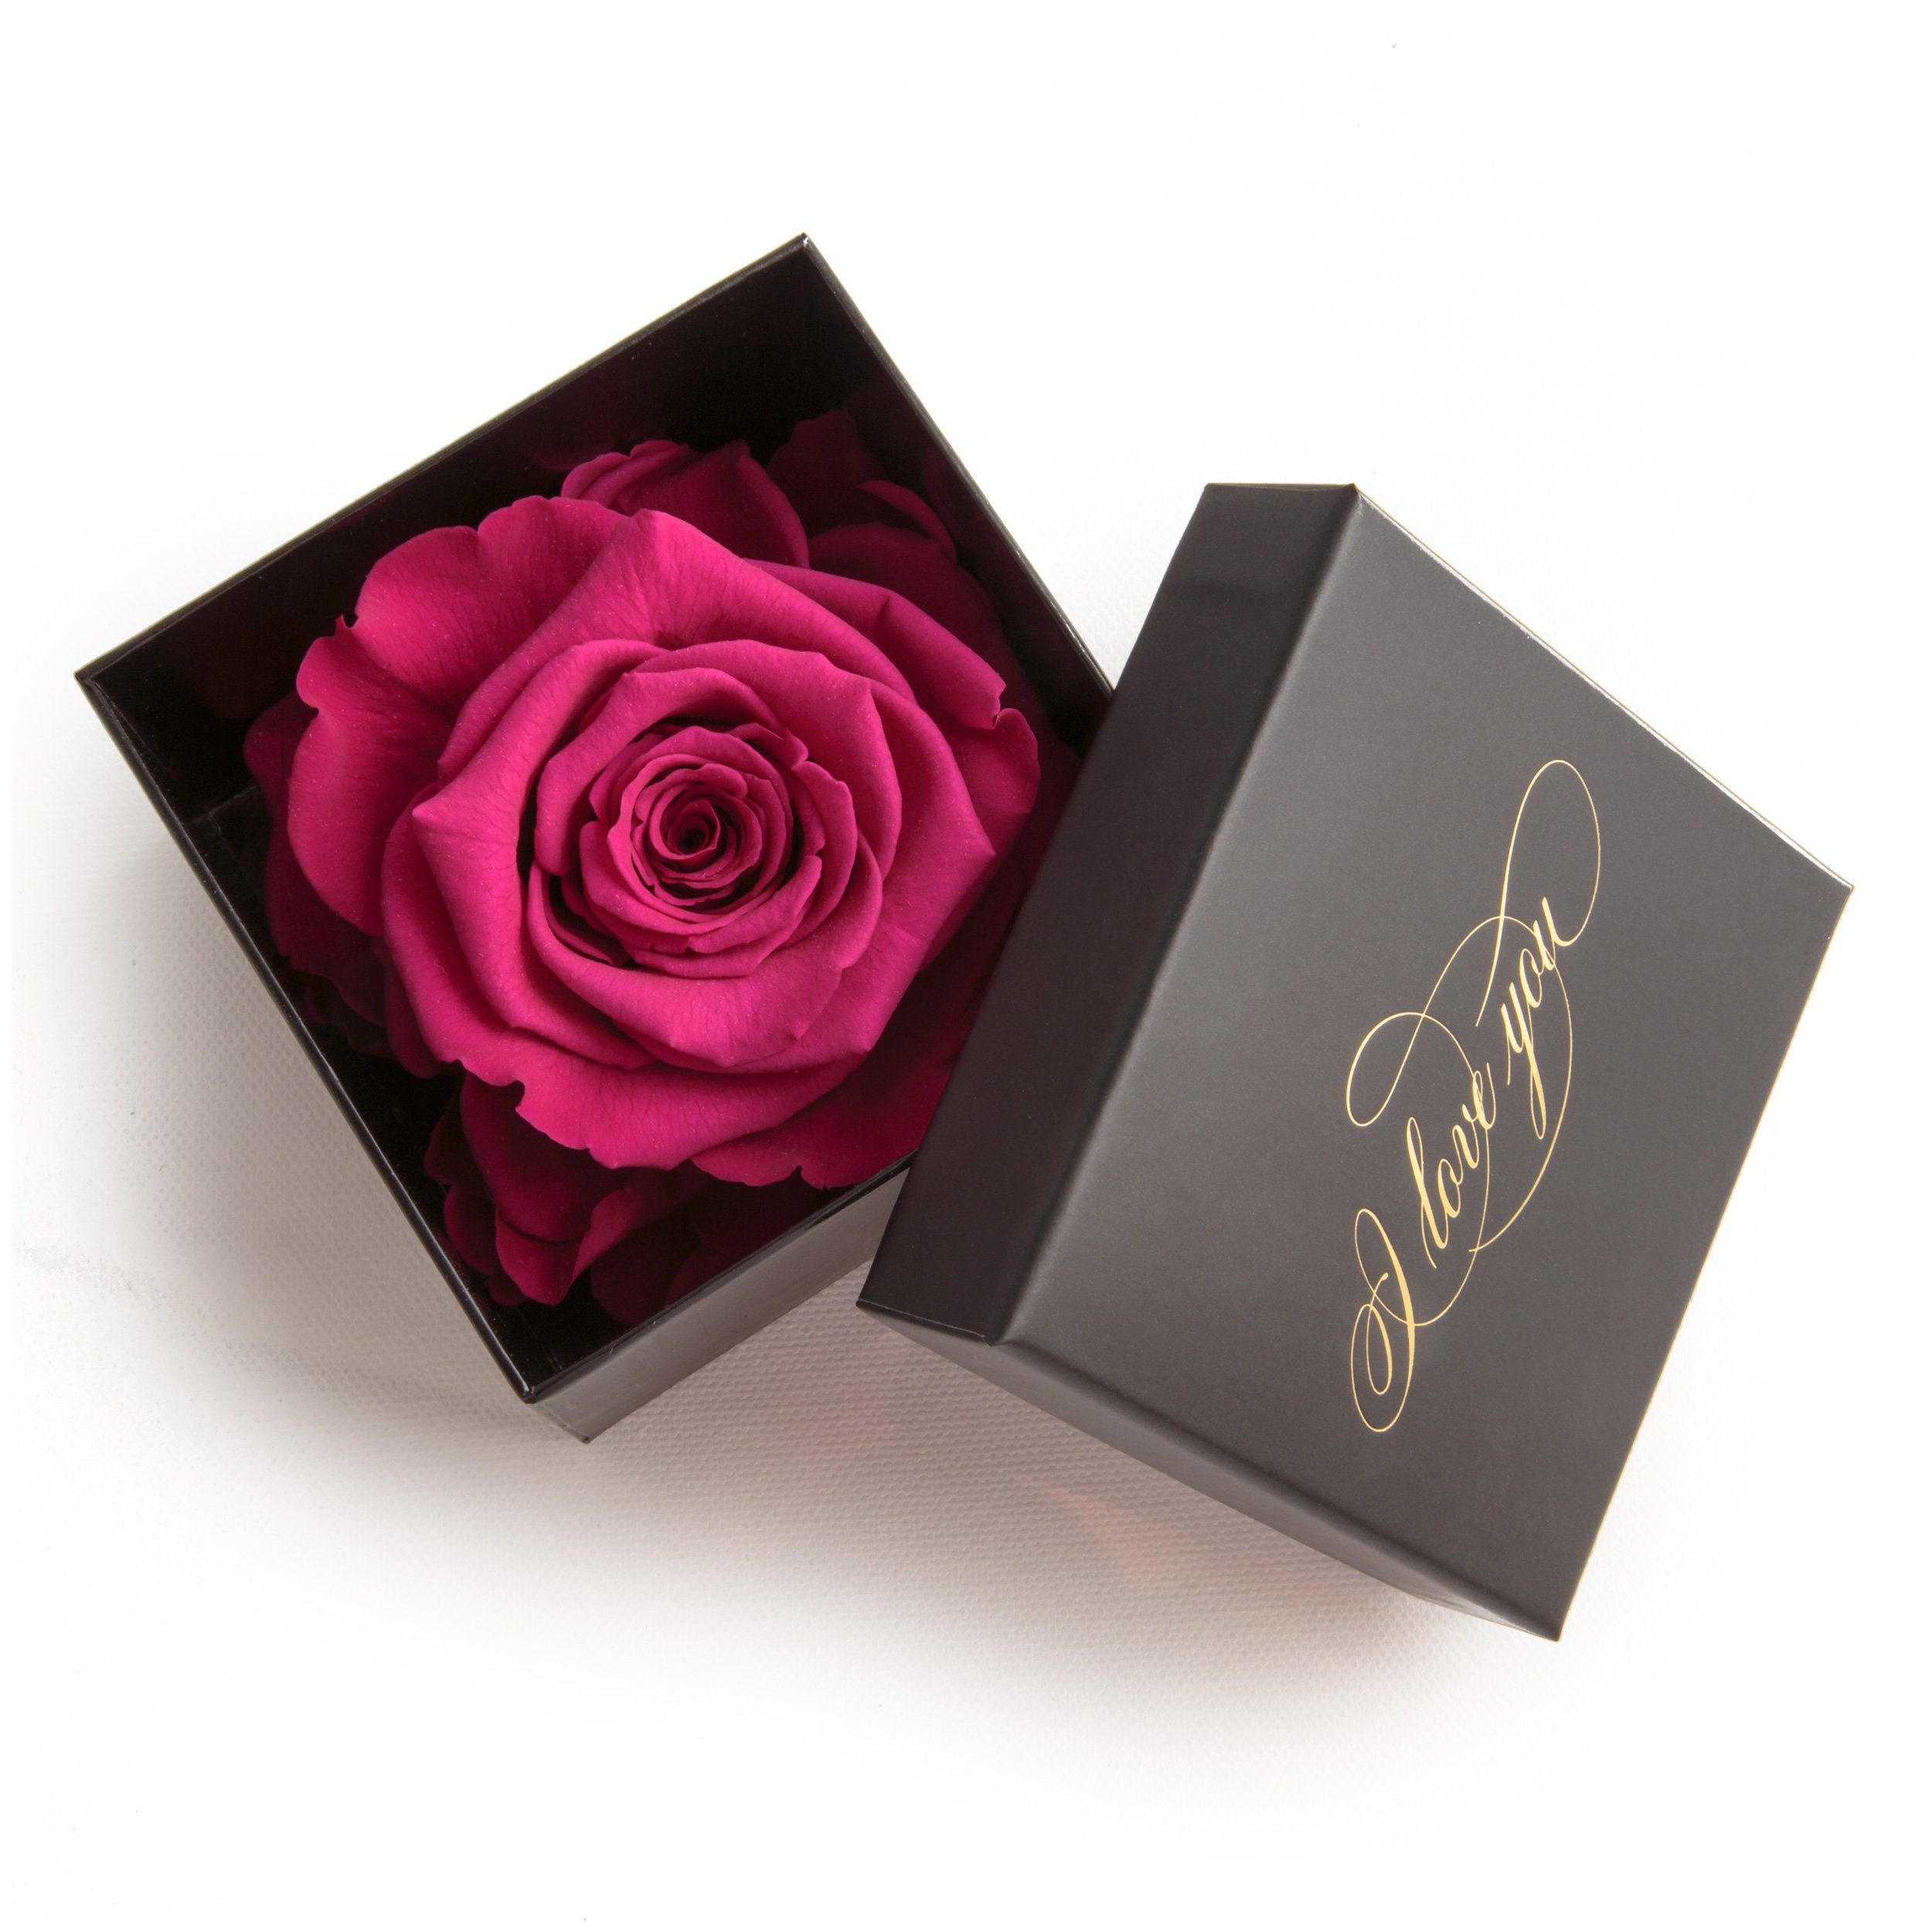 Kunstblume Infinity You Geschenk konserviert Idee cm, Echte Rose Love Rose, Pink ROSEMARIE Liebesbeweis 6 Rose Heidelberg, SCHULZ I Box Höhe